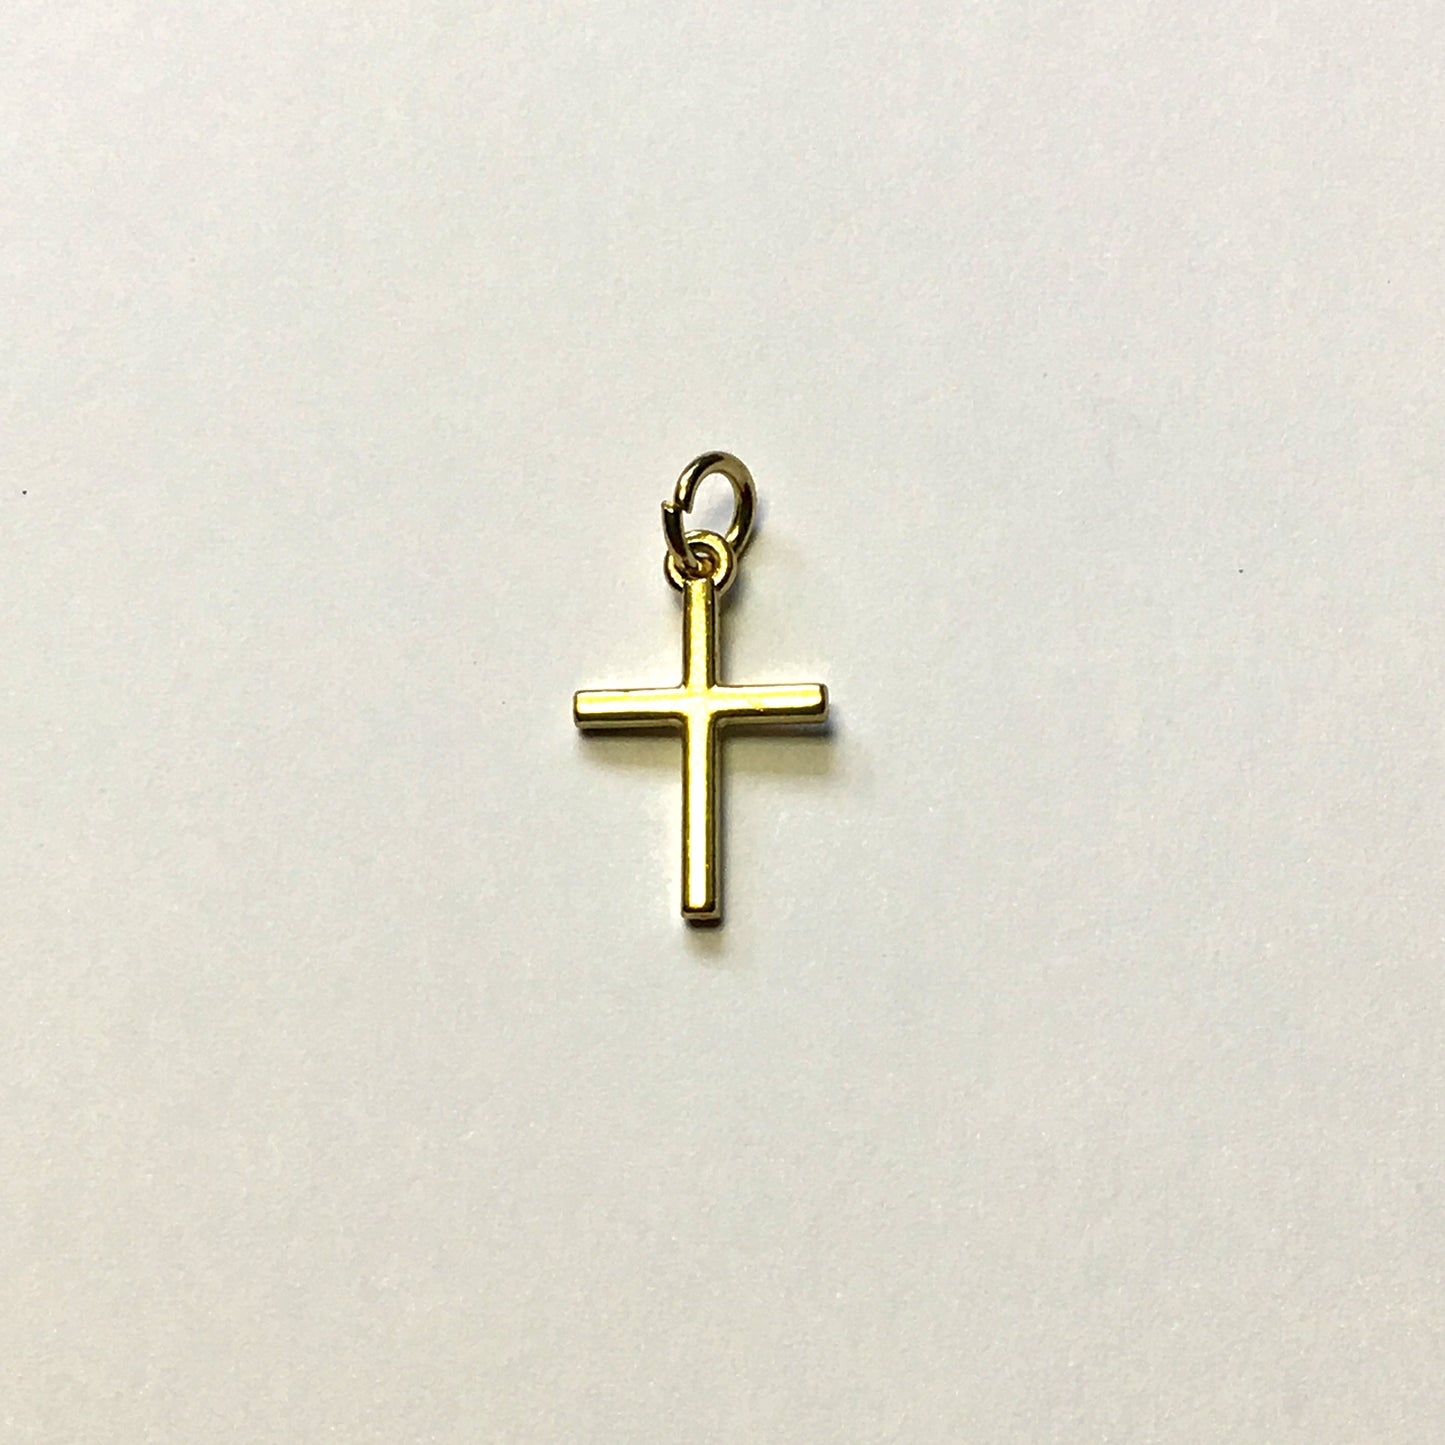 Gold Cross Charm, 18 x 12 mm